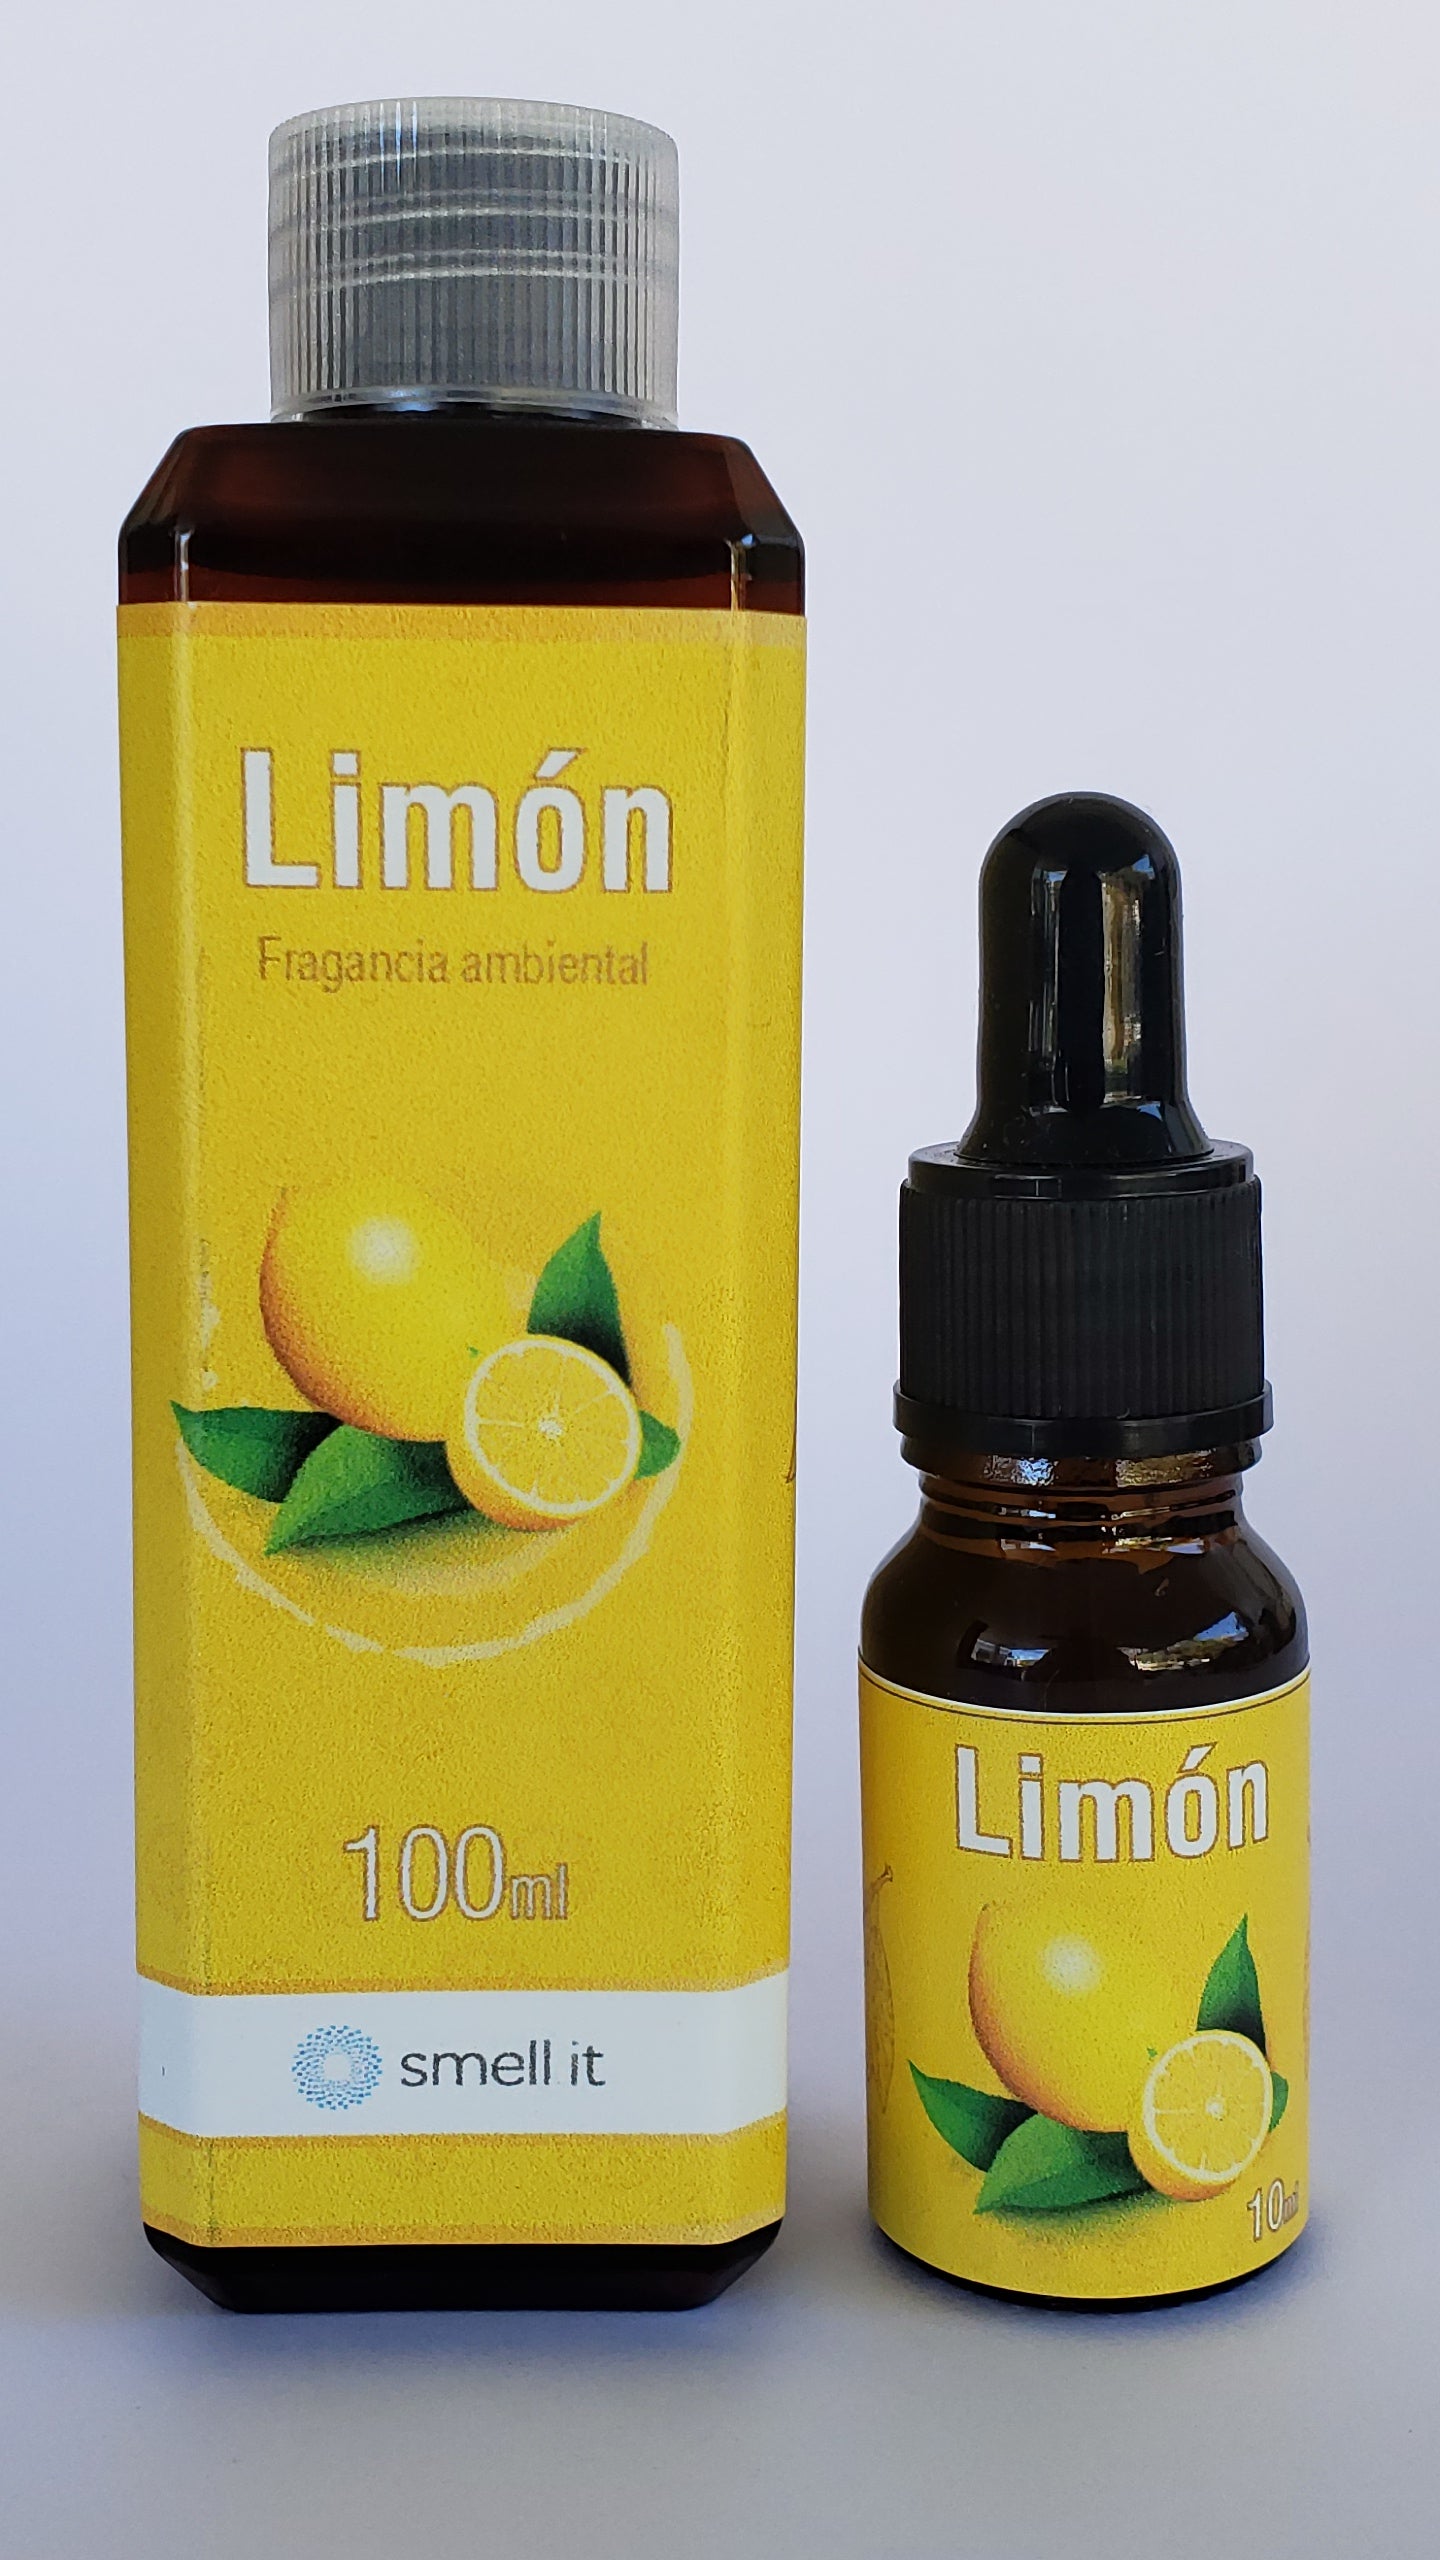 Fragancia Ambiental - Limon